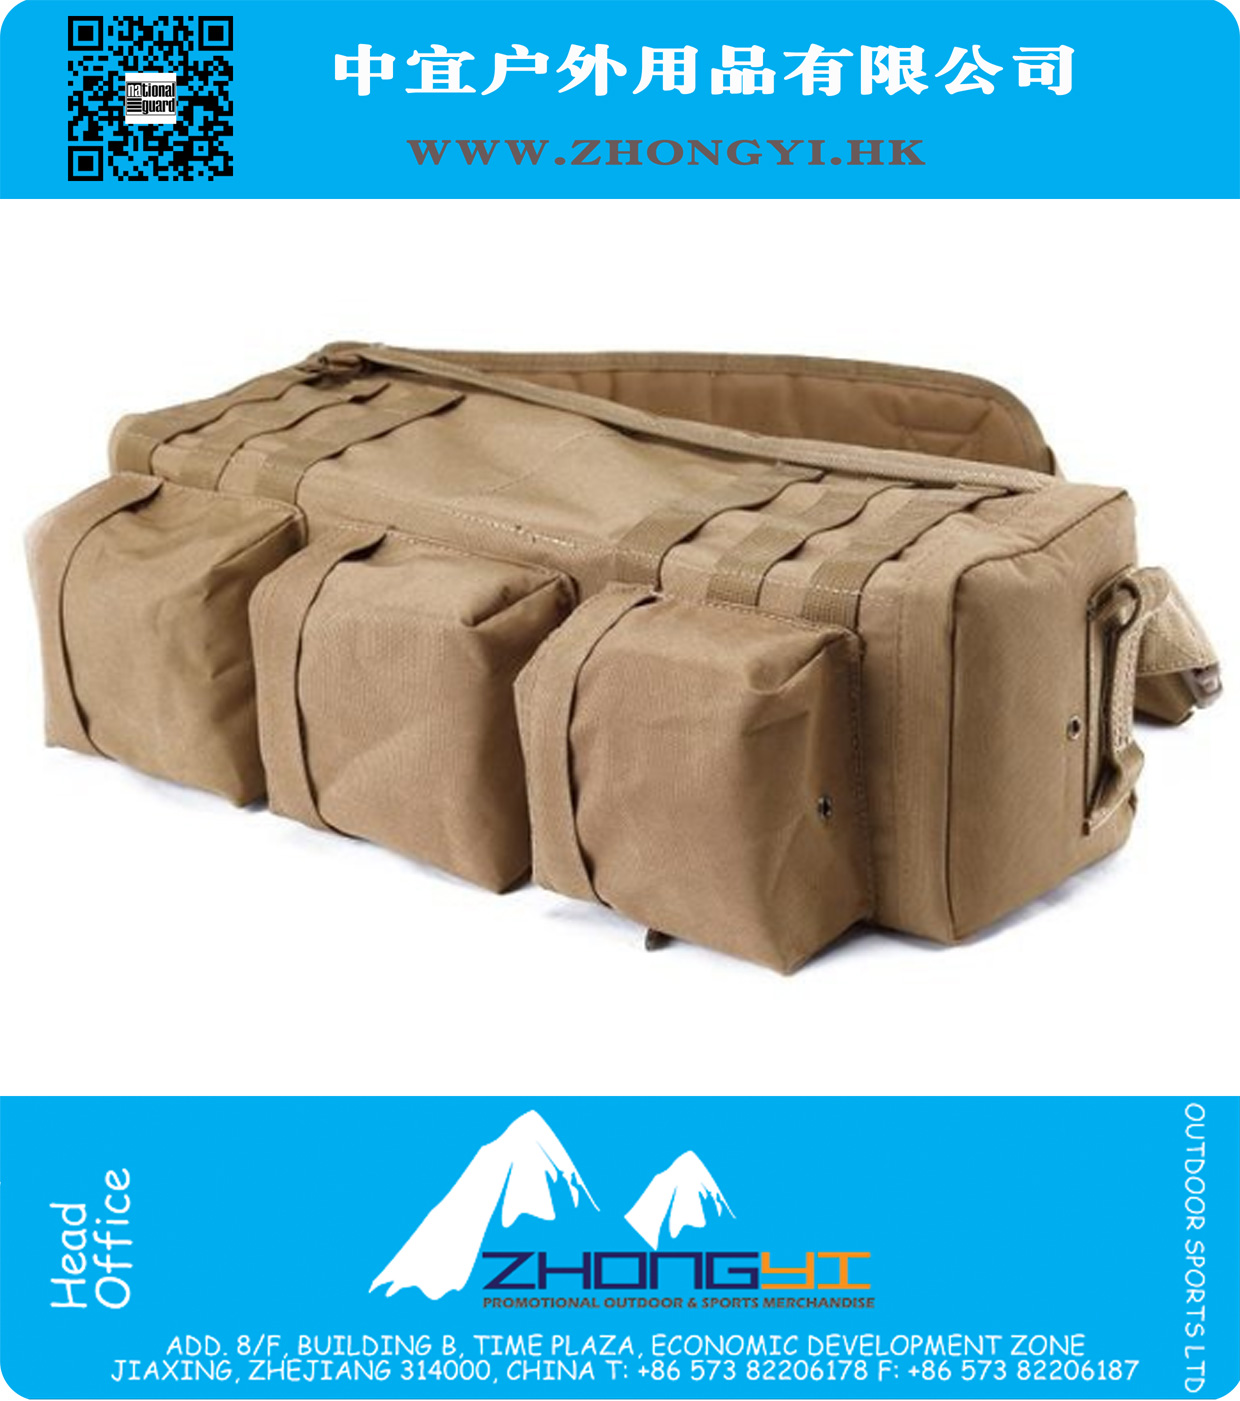 Rapid Dominance Classic Military Messenger Bags, Tactical Shoulder Bag –  The Park Wholesale